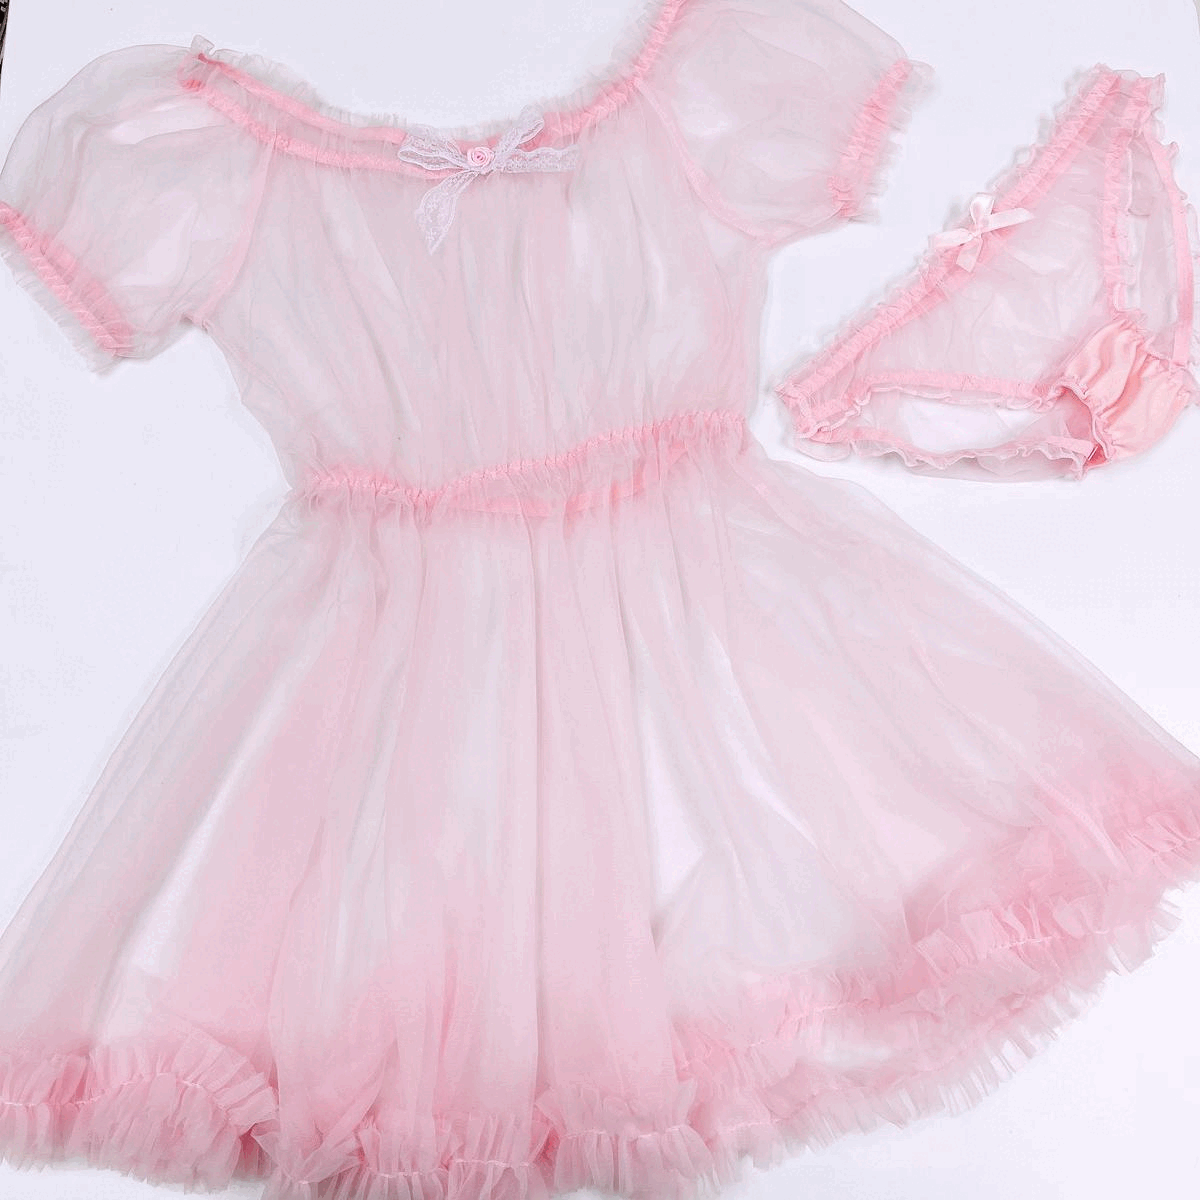 99% Angel Sheer Dress (Pink)